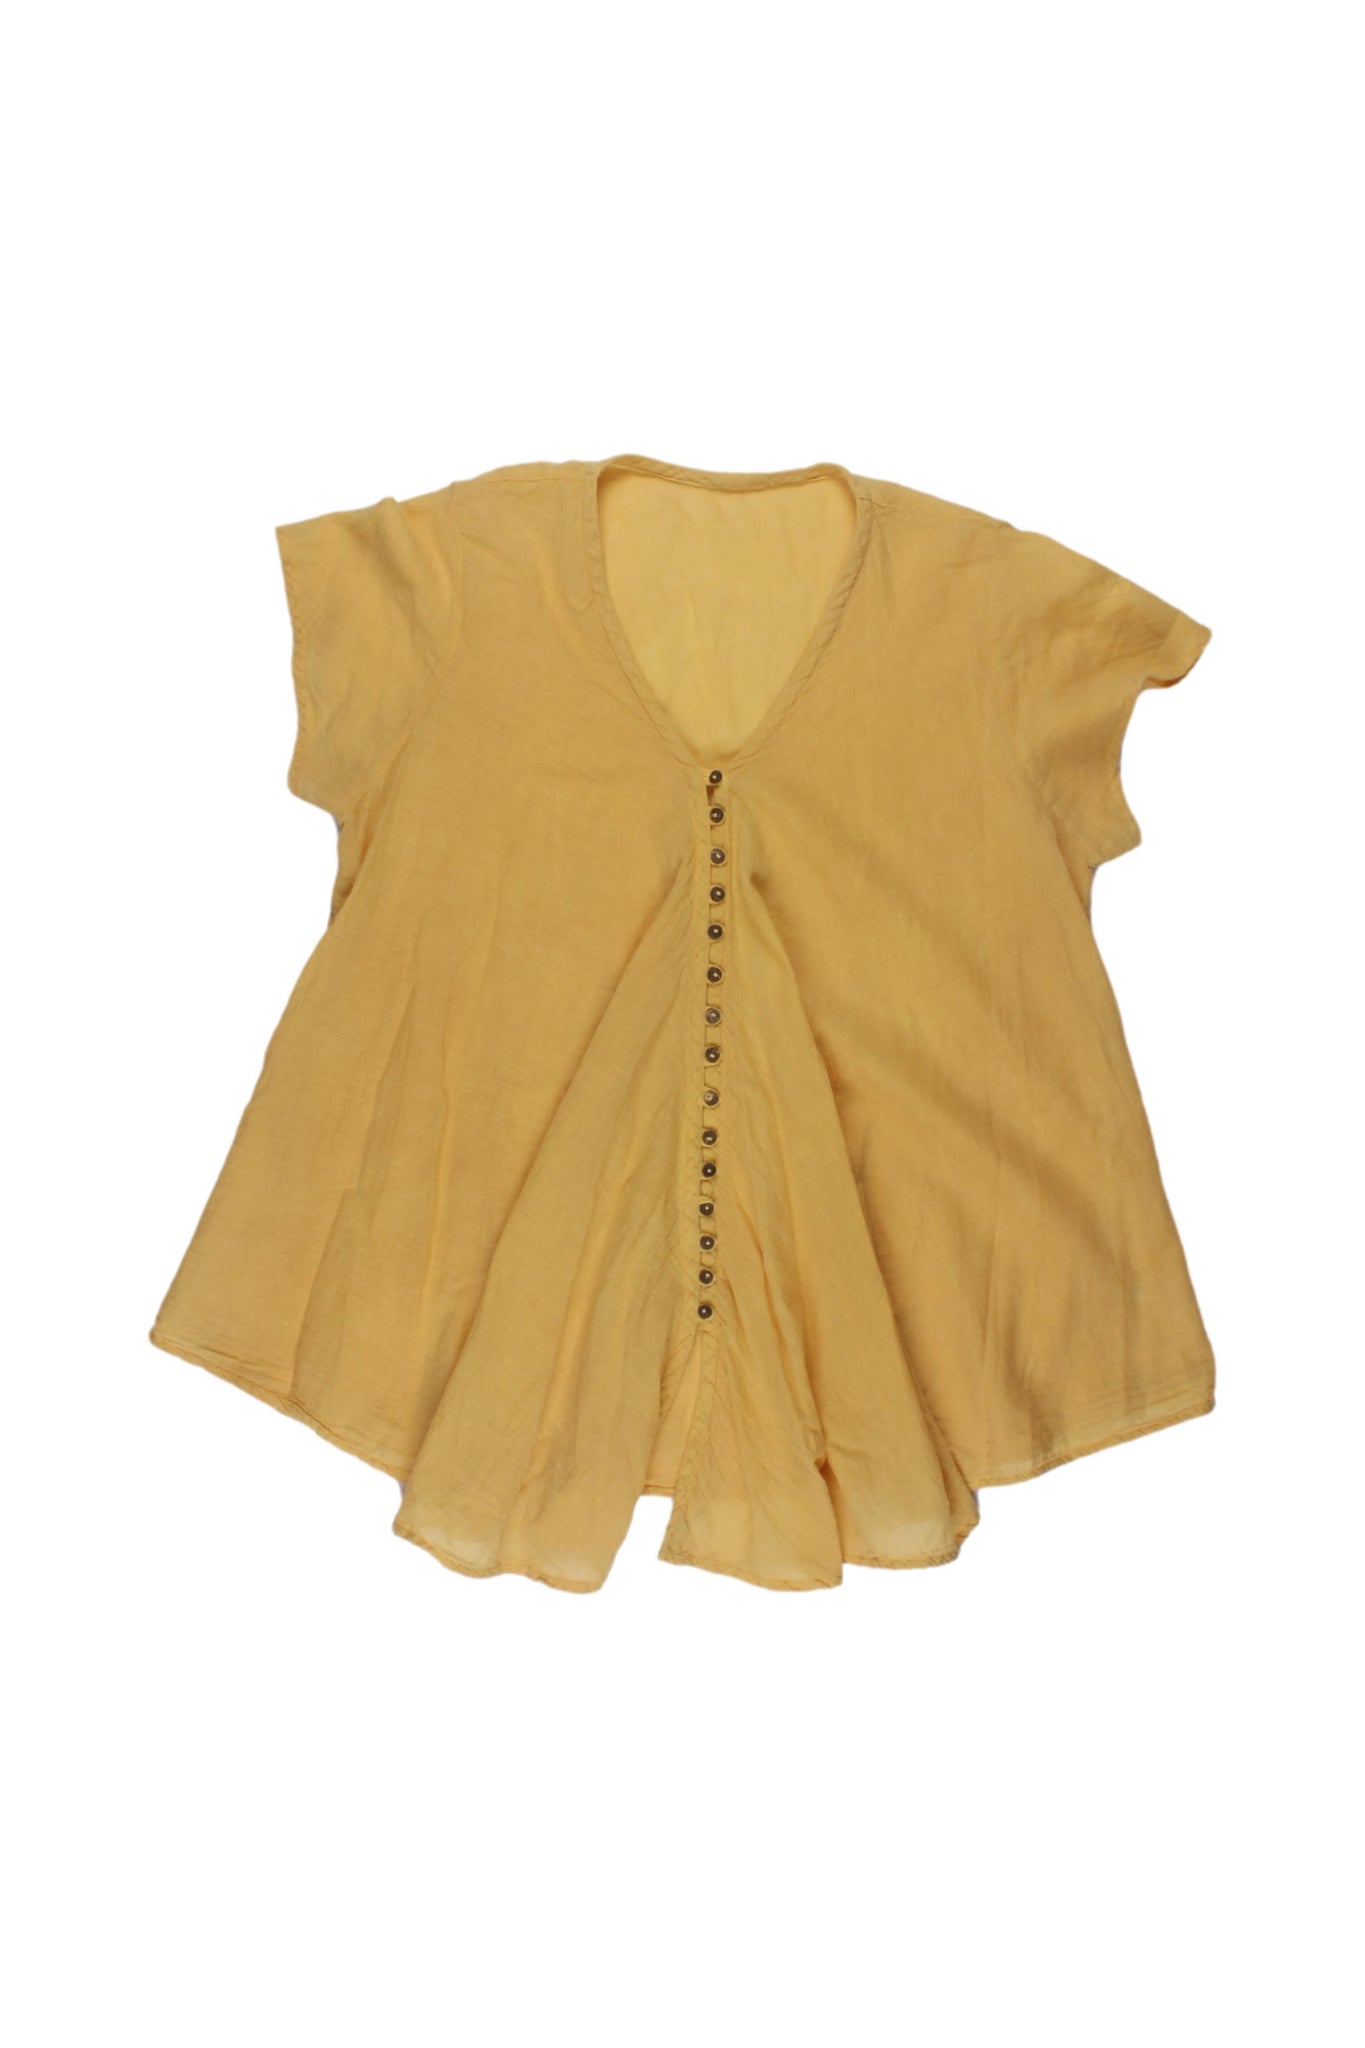 BRANDLESS - Blusa Suelta Color Amarillo Con Botones